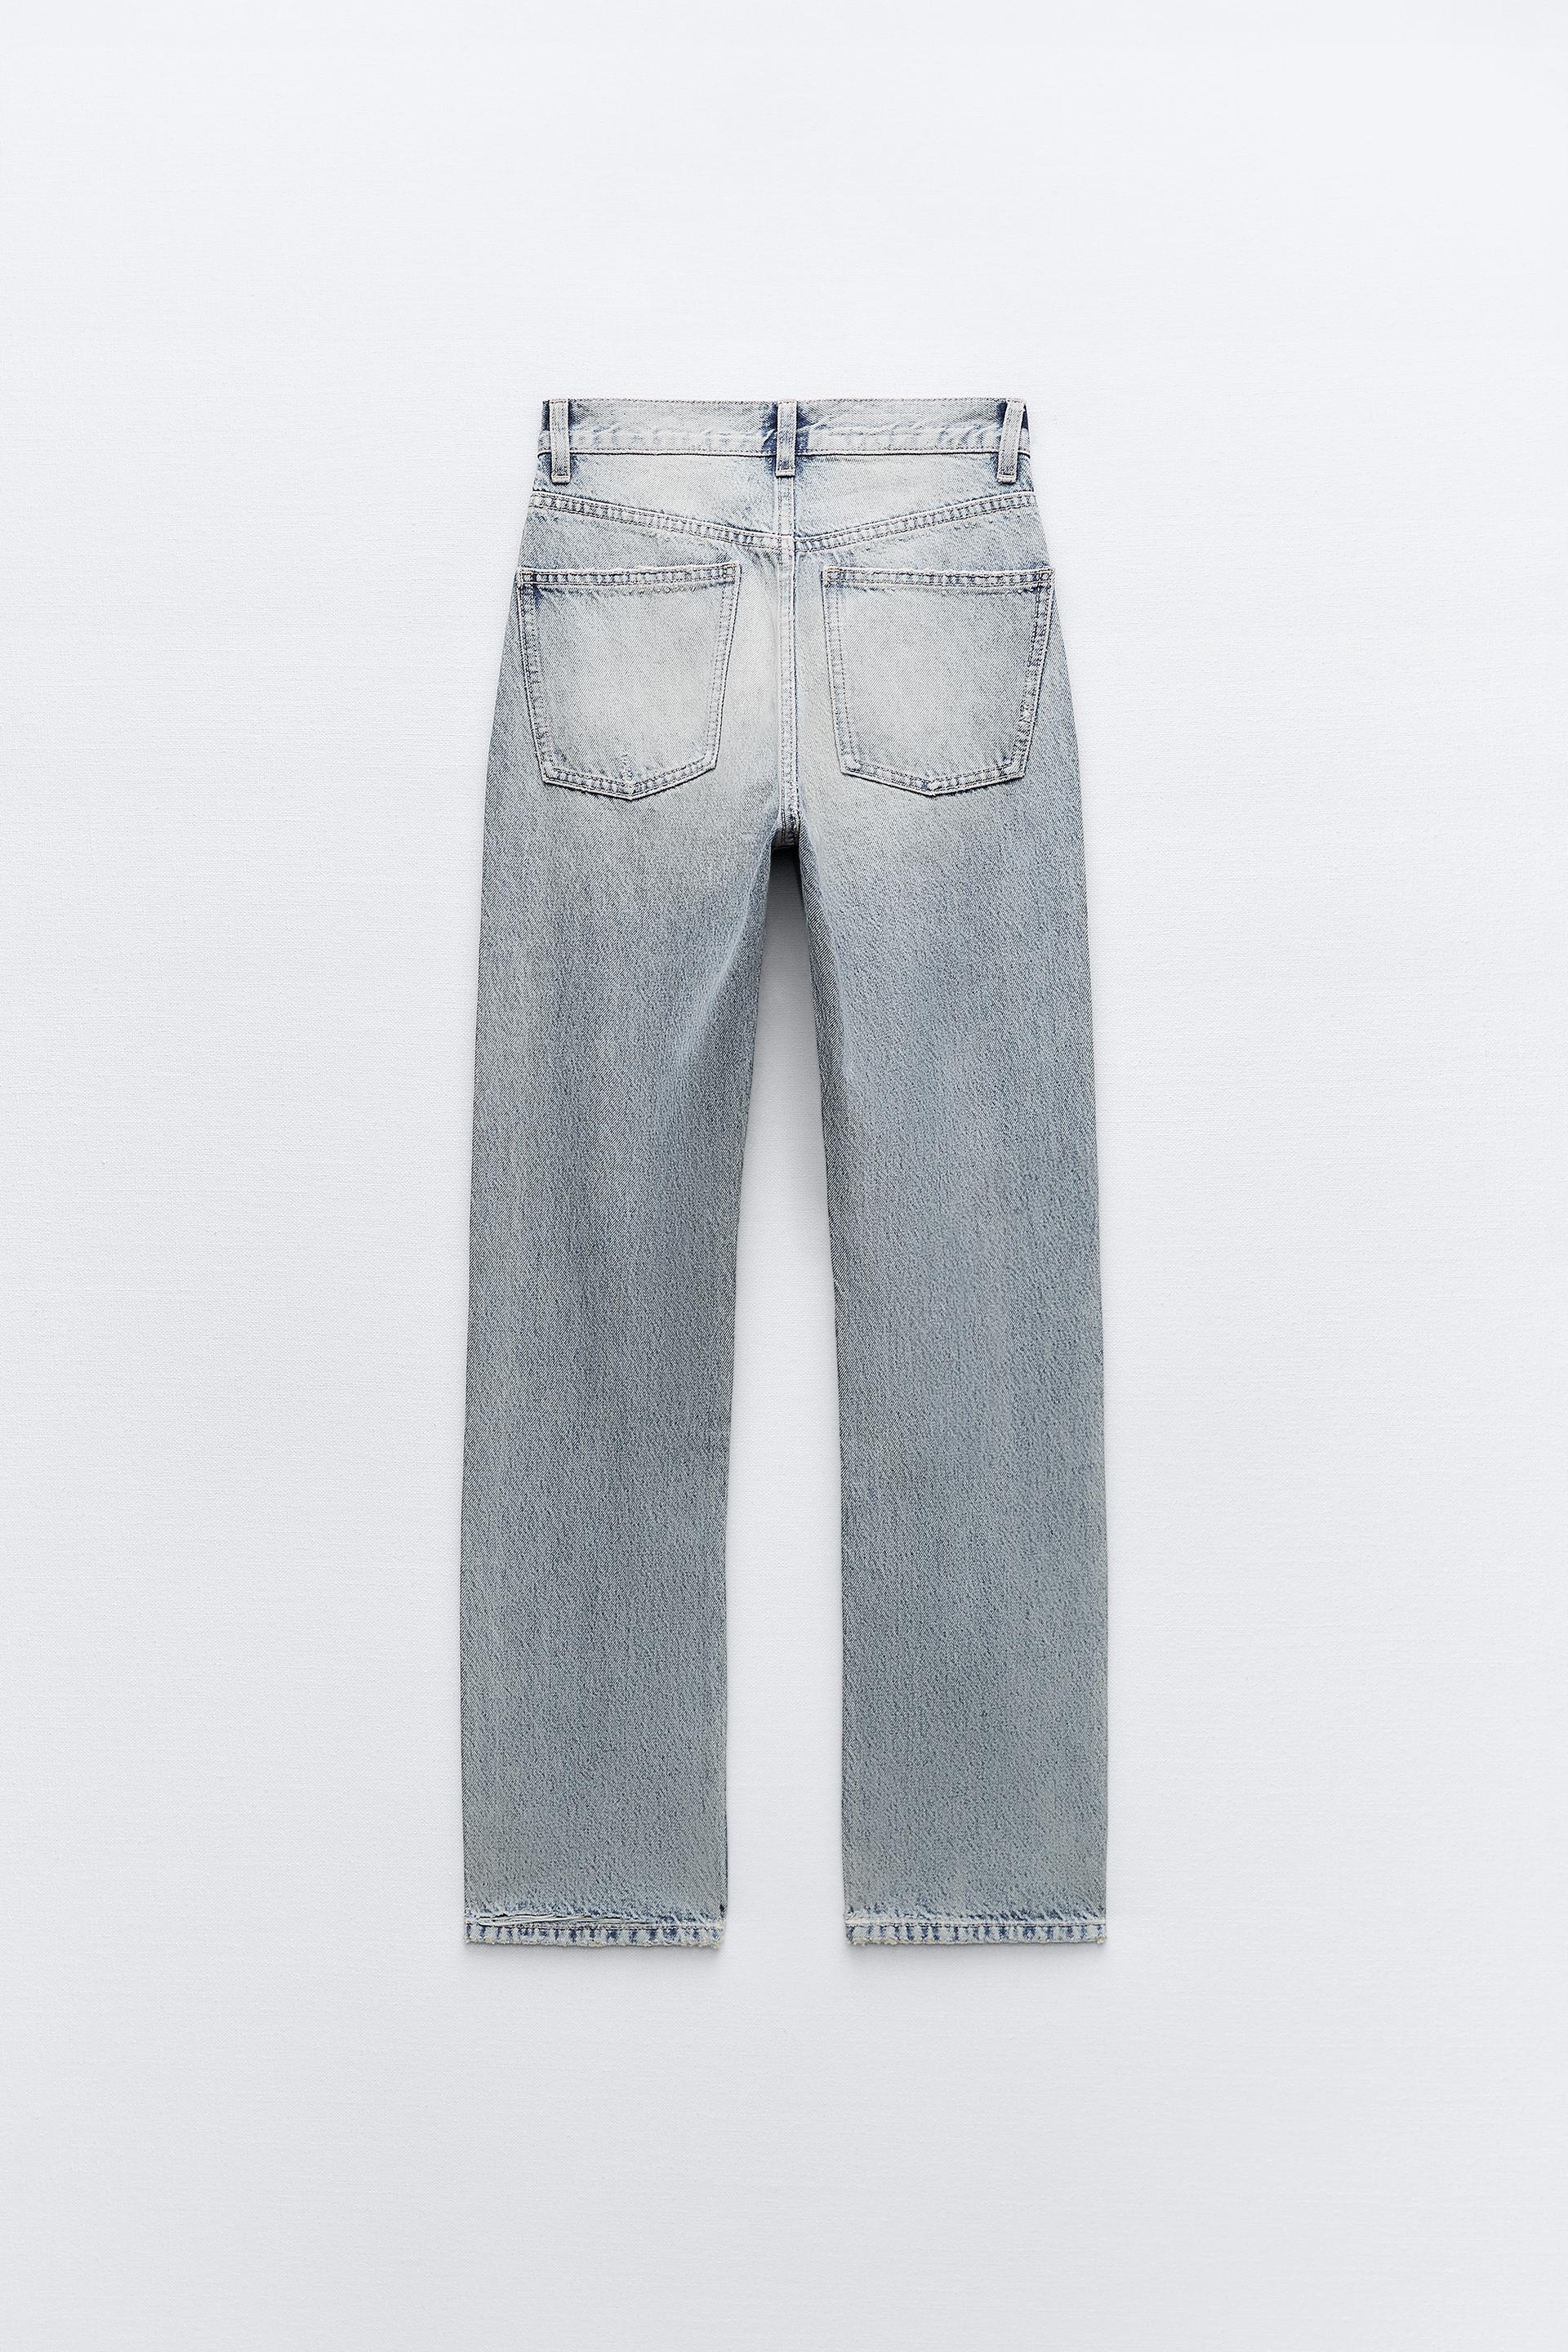 Zara, Jeans, Zara Blue White Stripe Hirise Shaper Ankle Length Super  Elastic Jeans 2